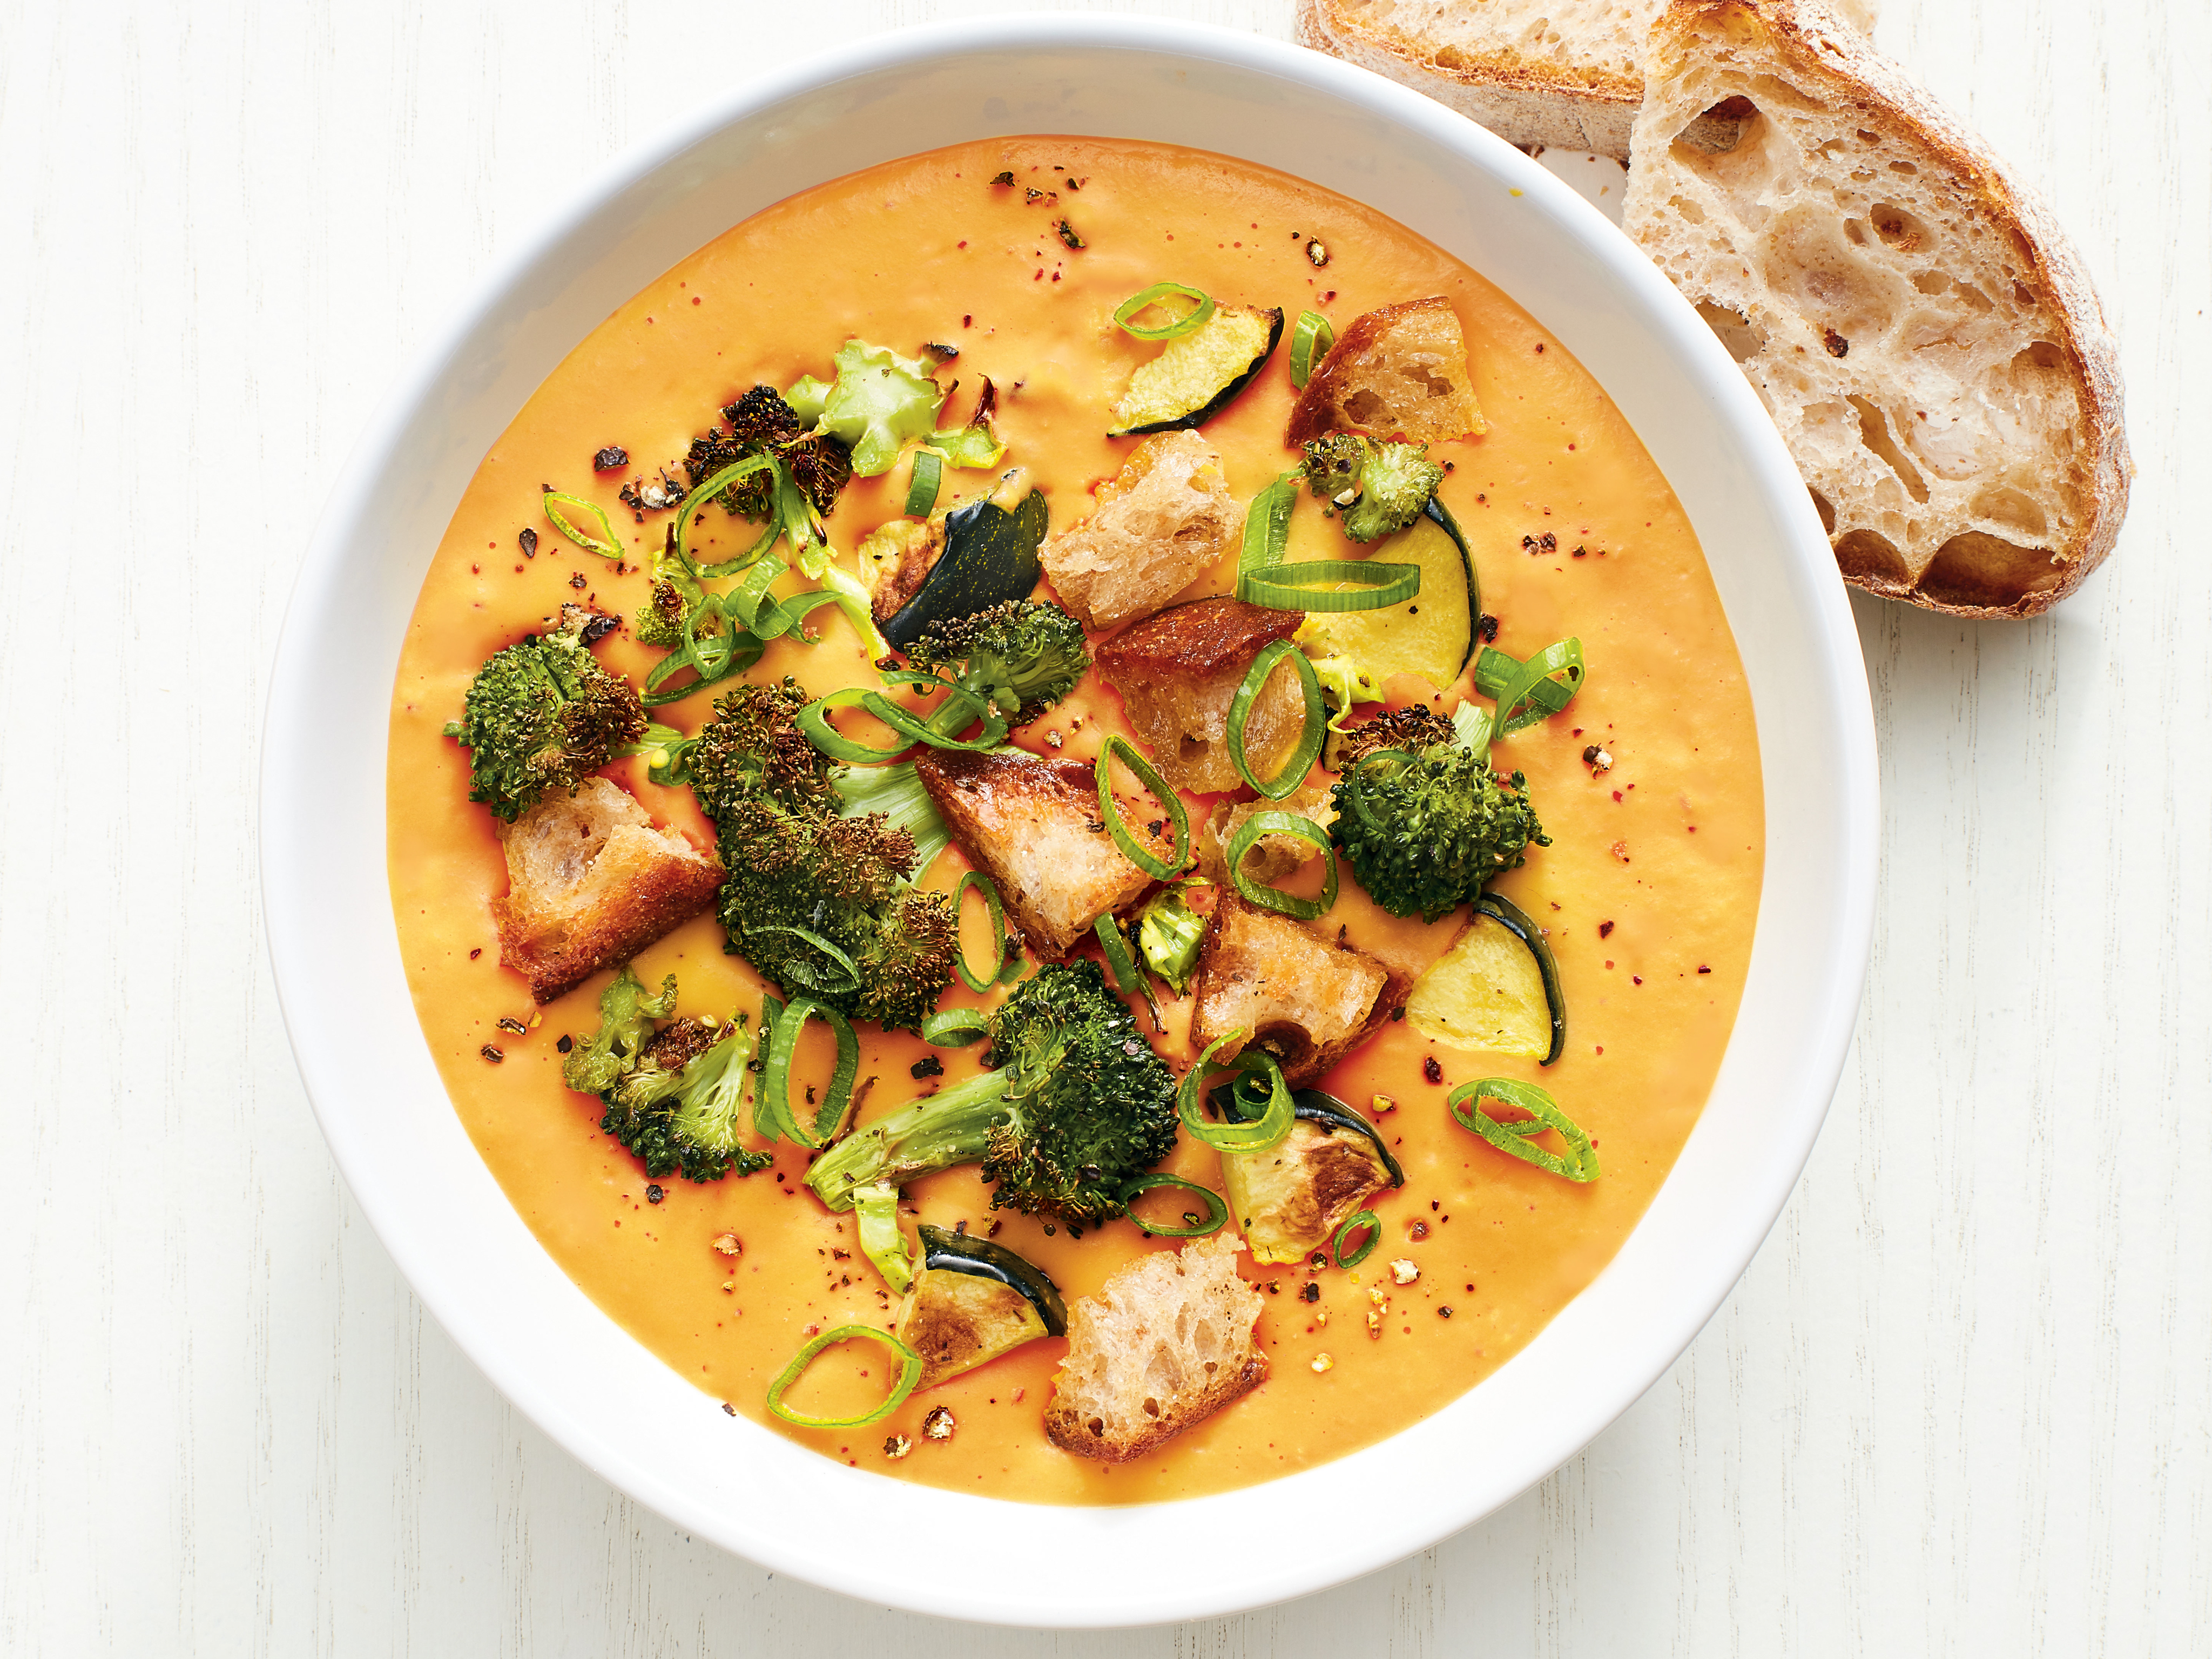 https://www.foodnetwork.com/content/dam/images/food/fullset/2017/8/28/0/FNM100117_Carrot-Ginger-Soup-with-Roasted-Vegetables_s4x3.jpg